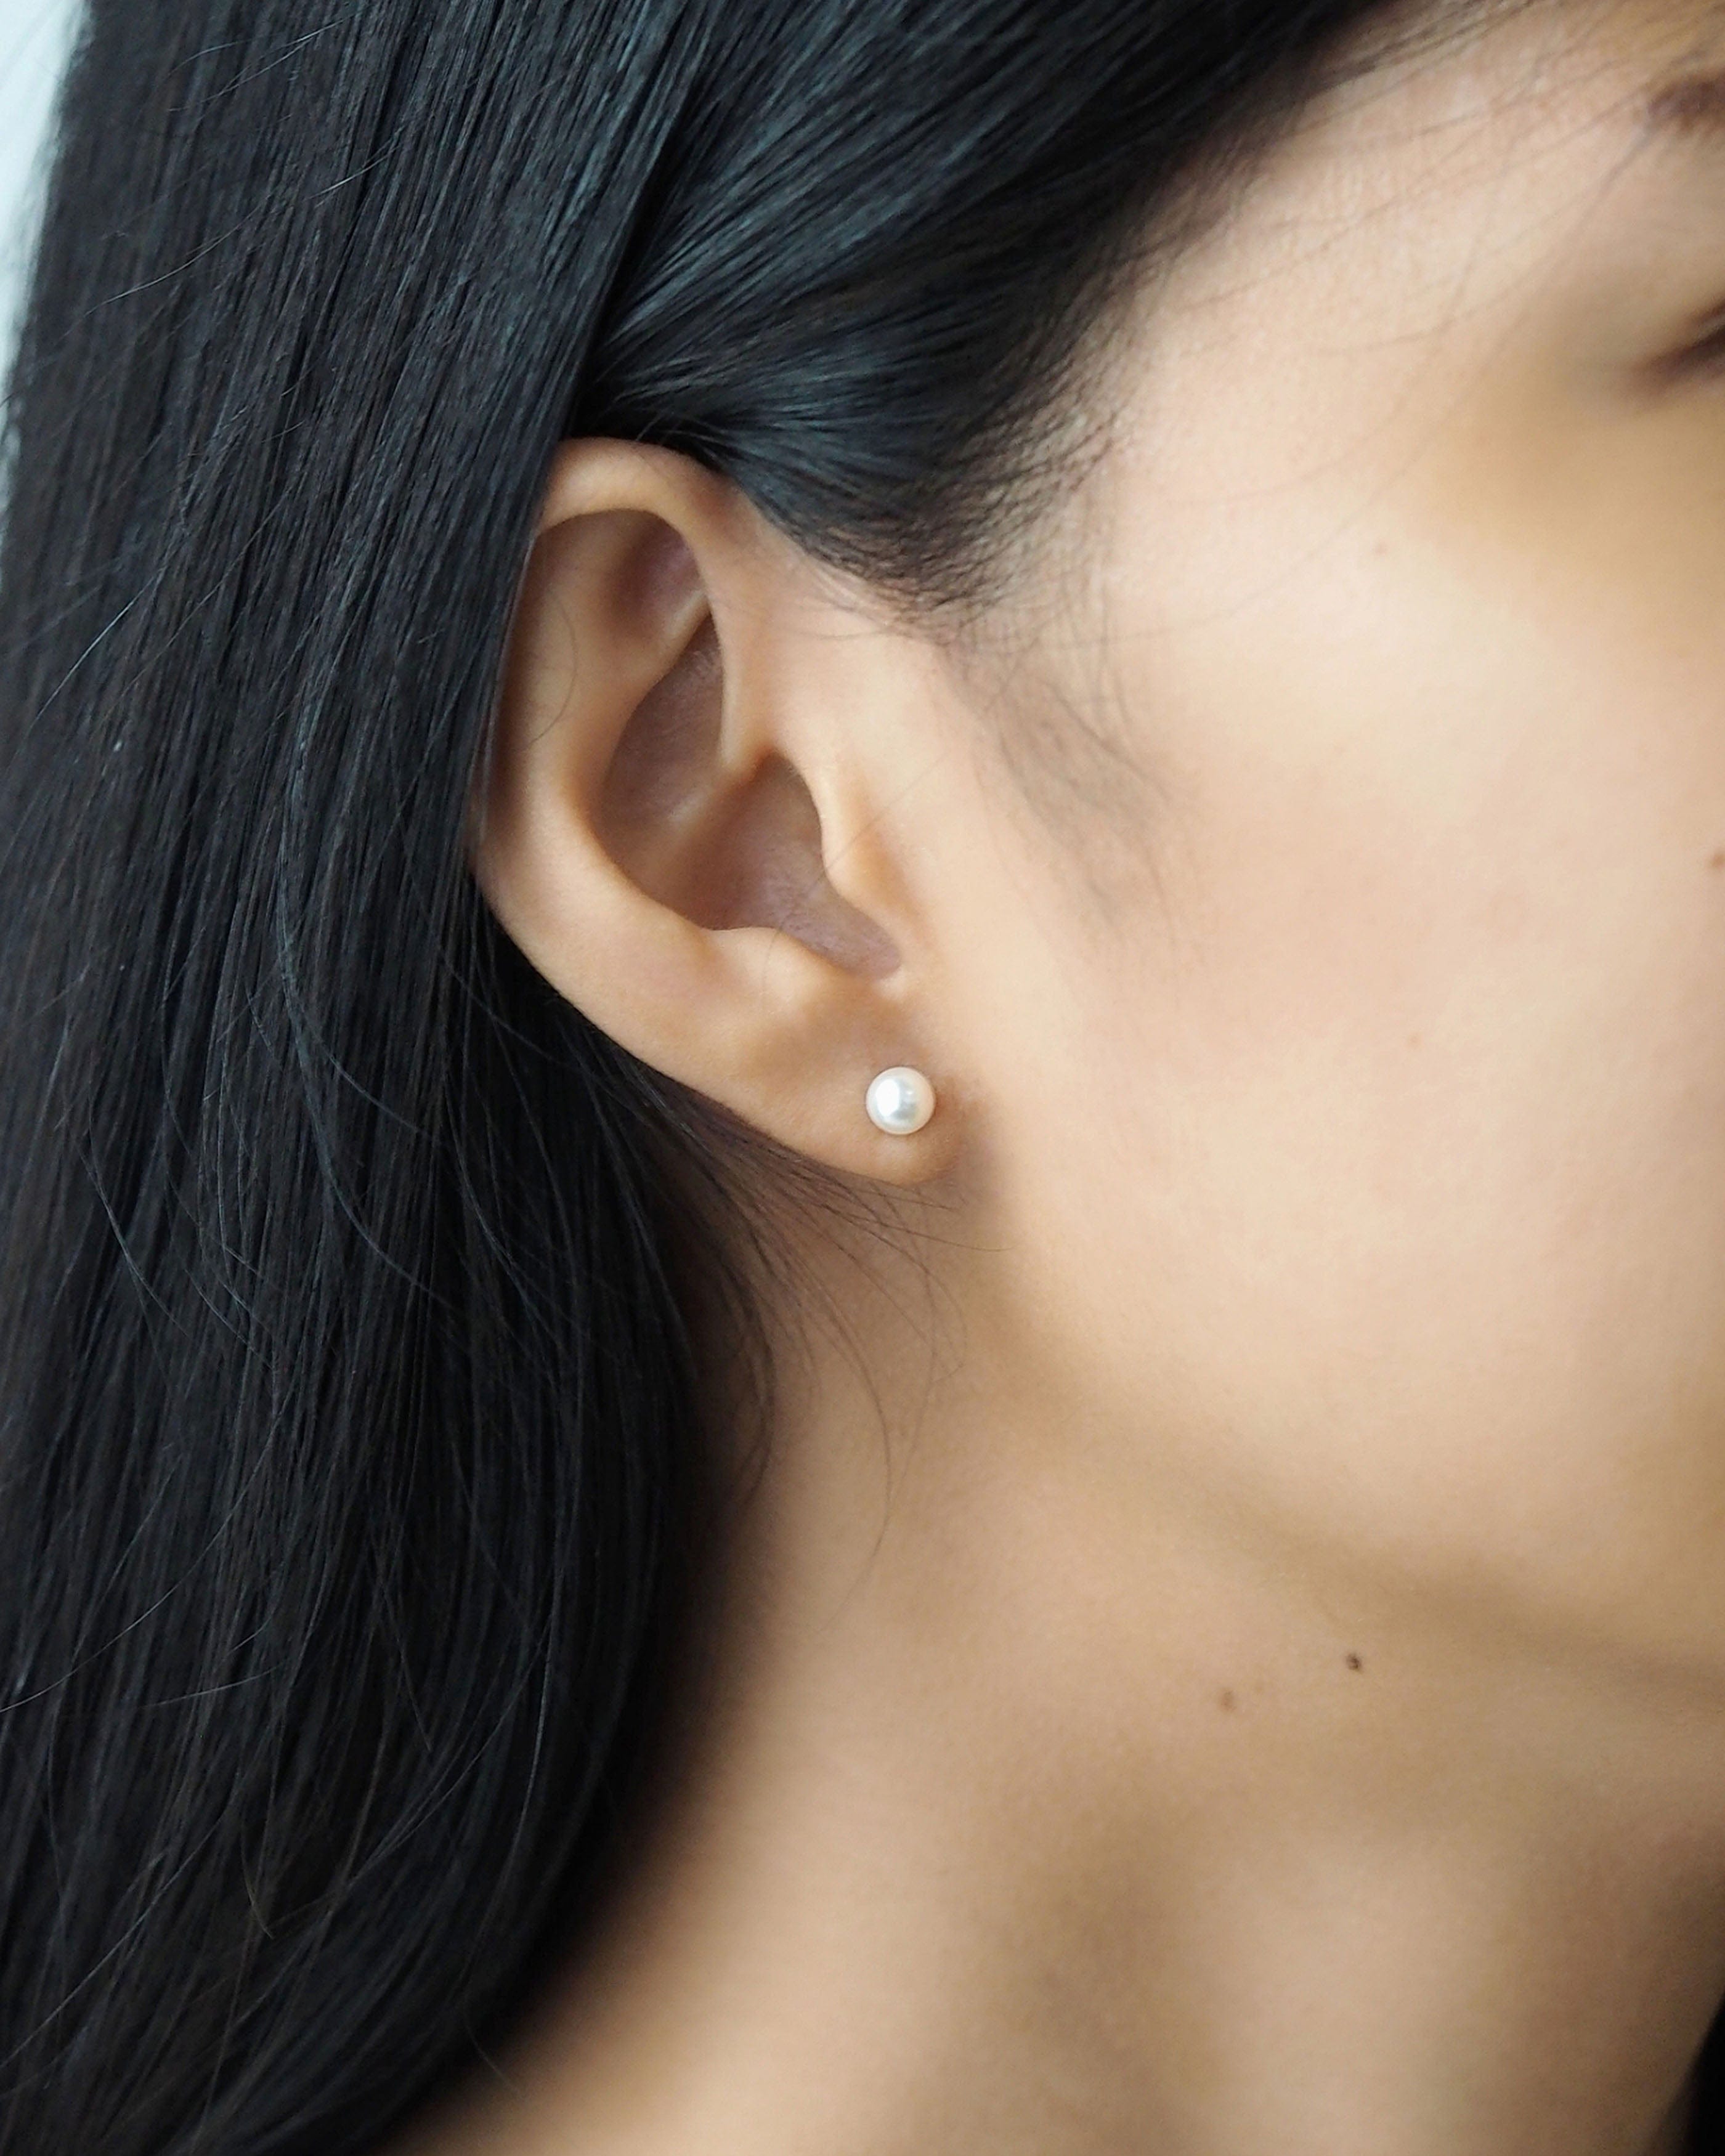 TAI JEWELRY Earrings Classic 5mm Pearl Stud